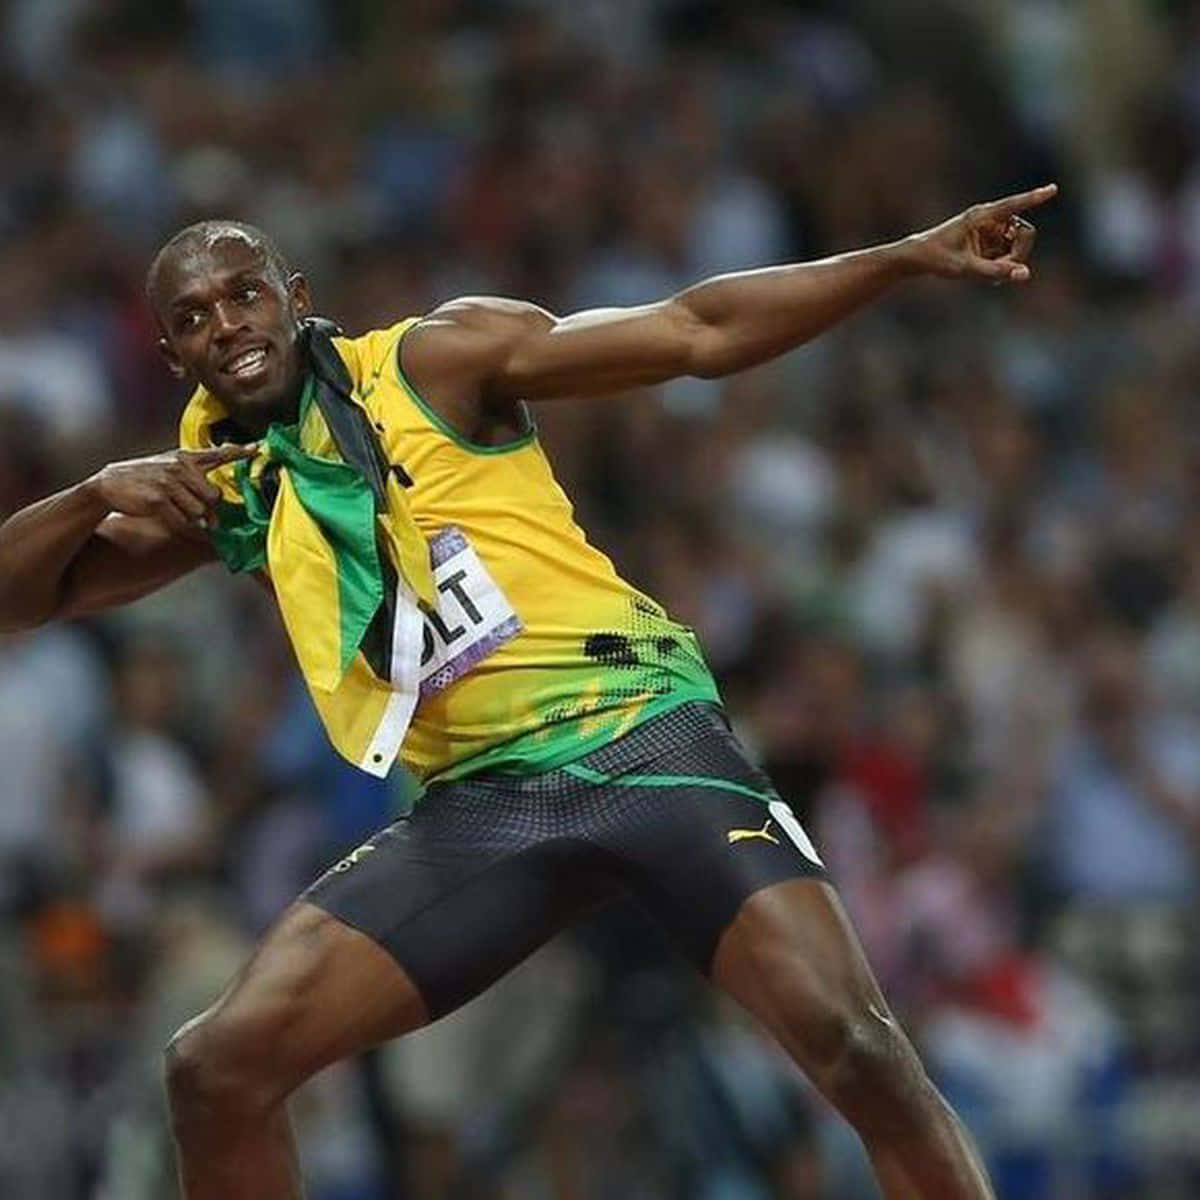 Usain Bolt files to trademark his signature celebration pose